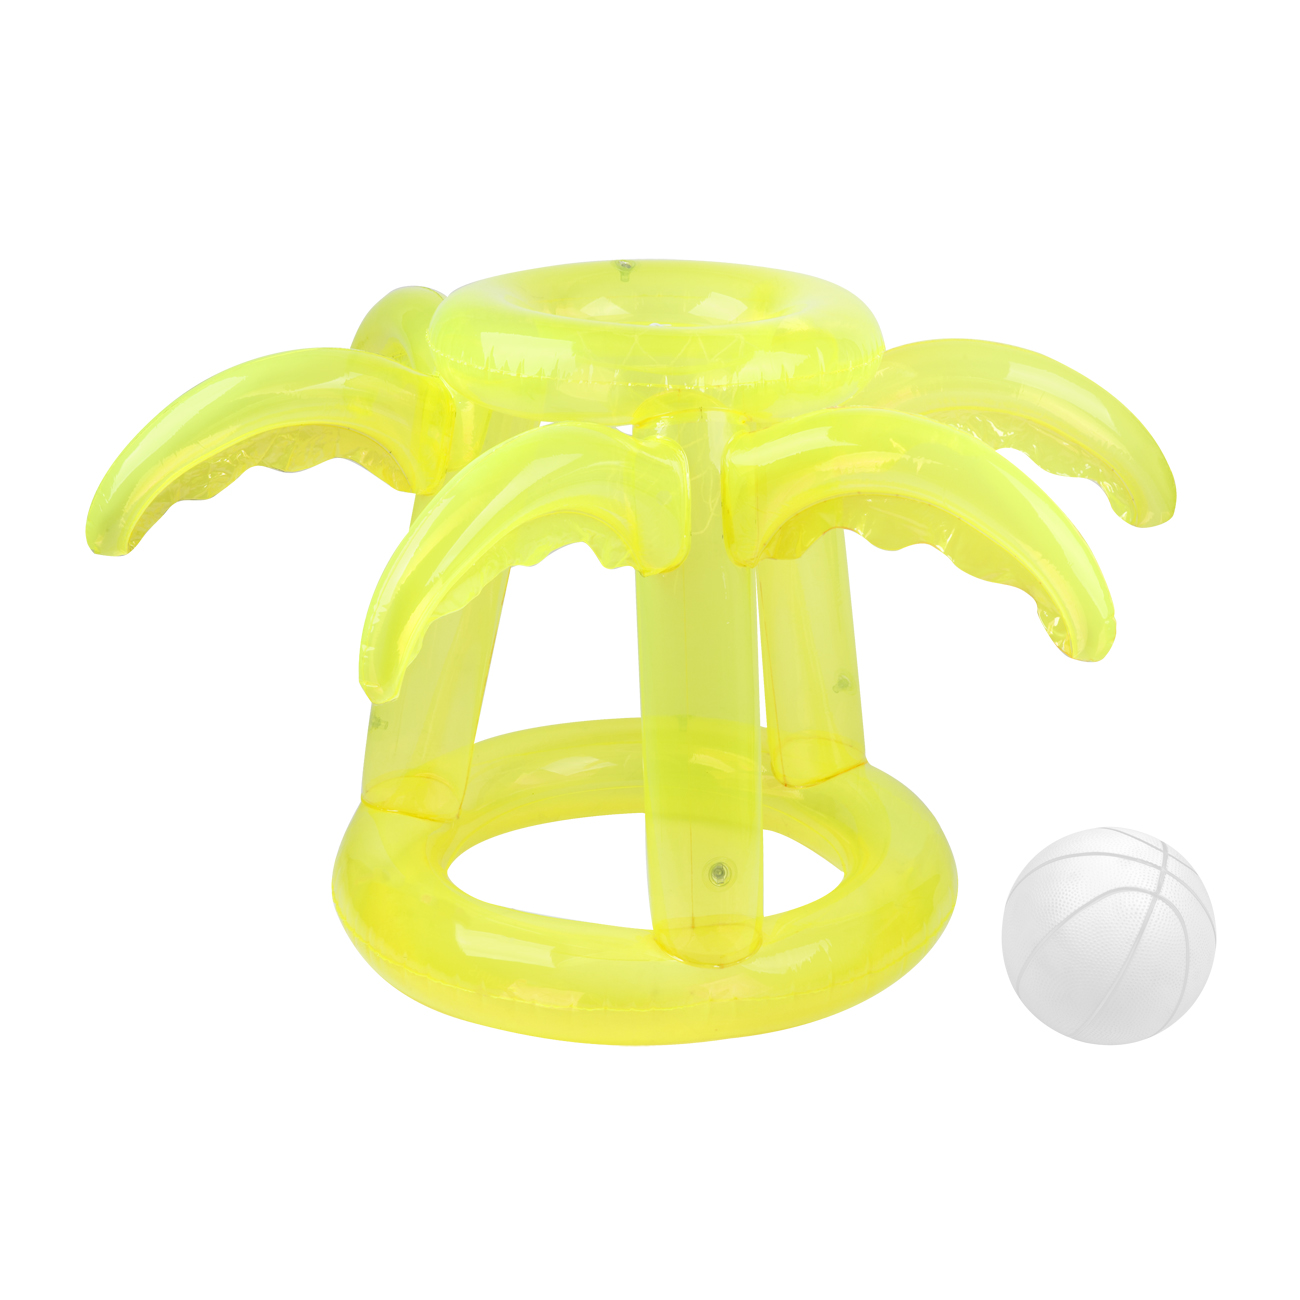 Sunnylife Inflatable Float Away Basketball Set Tropicalneon Lime